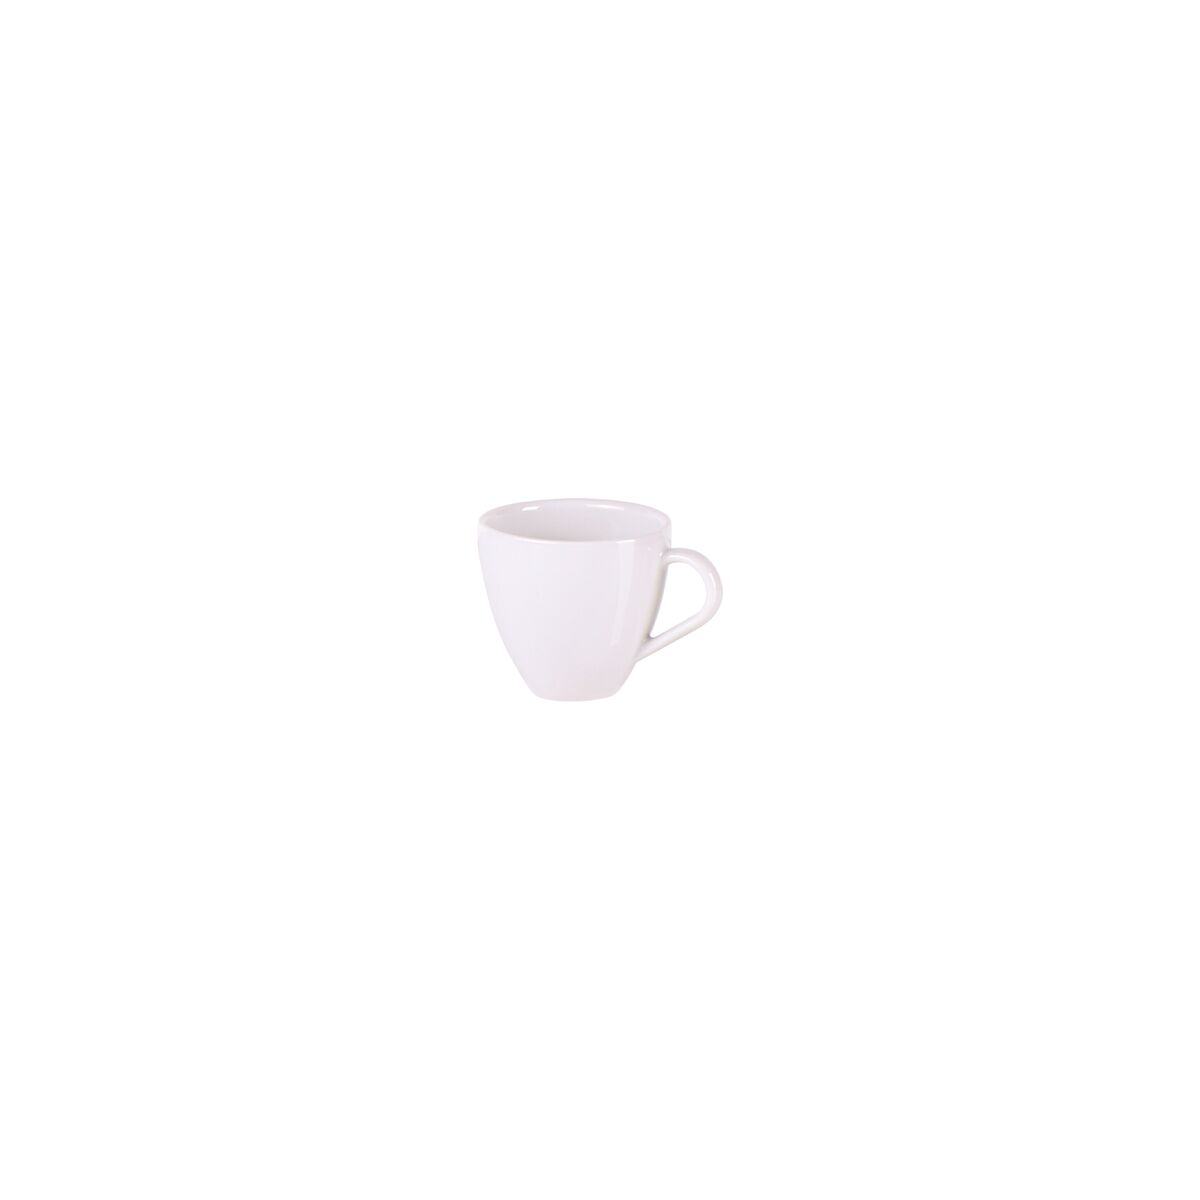 Tramontina Paola 95 ml Porcelain Espresso Cup